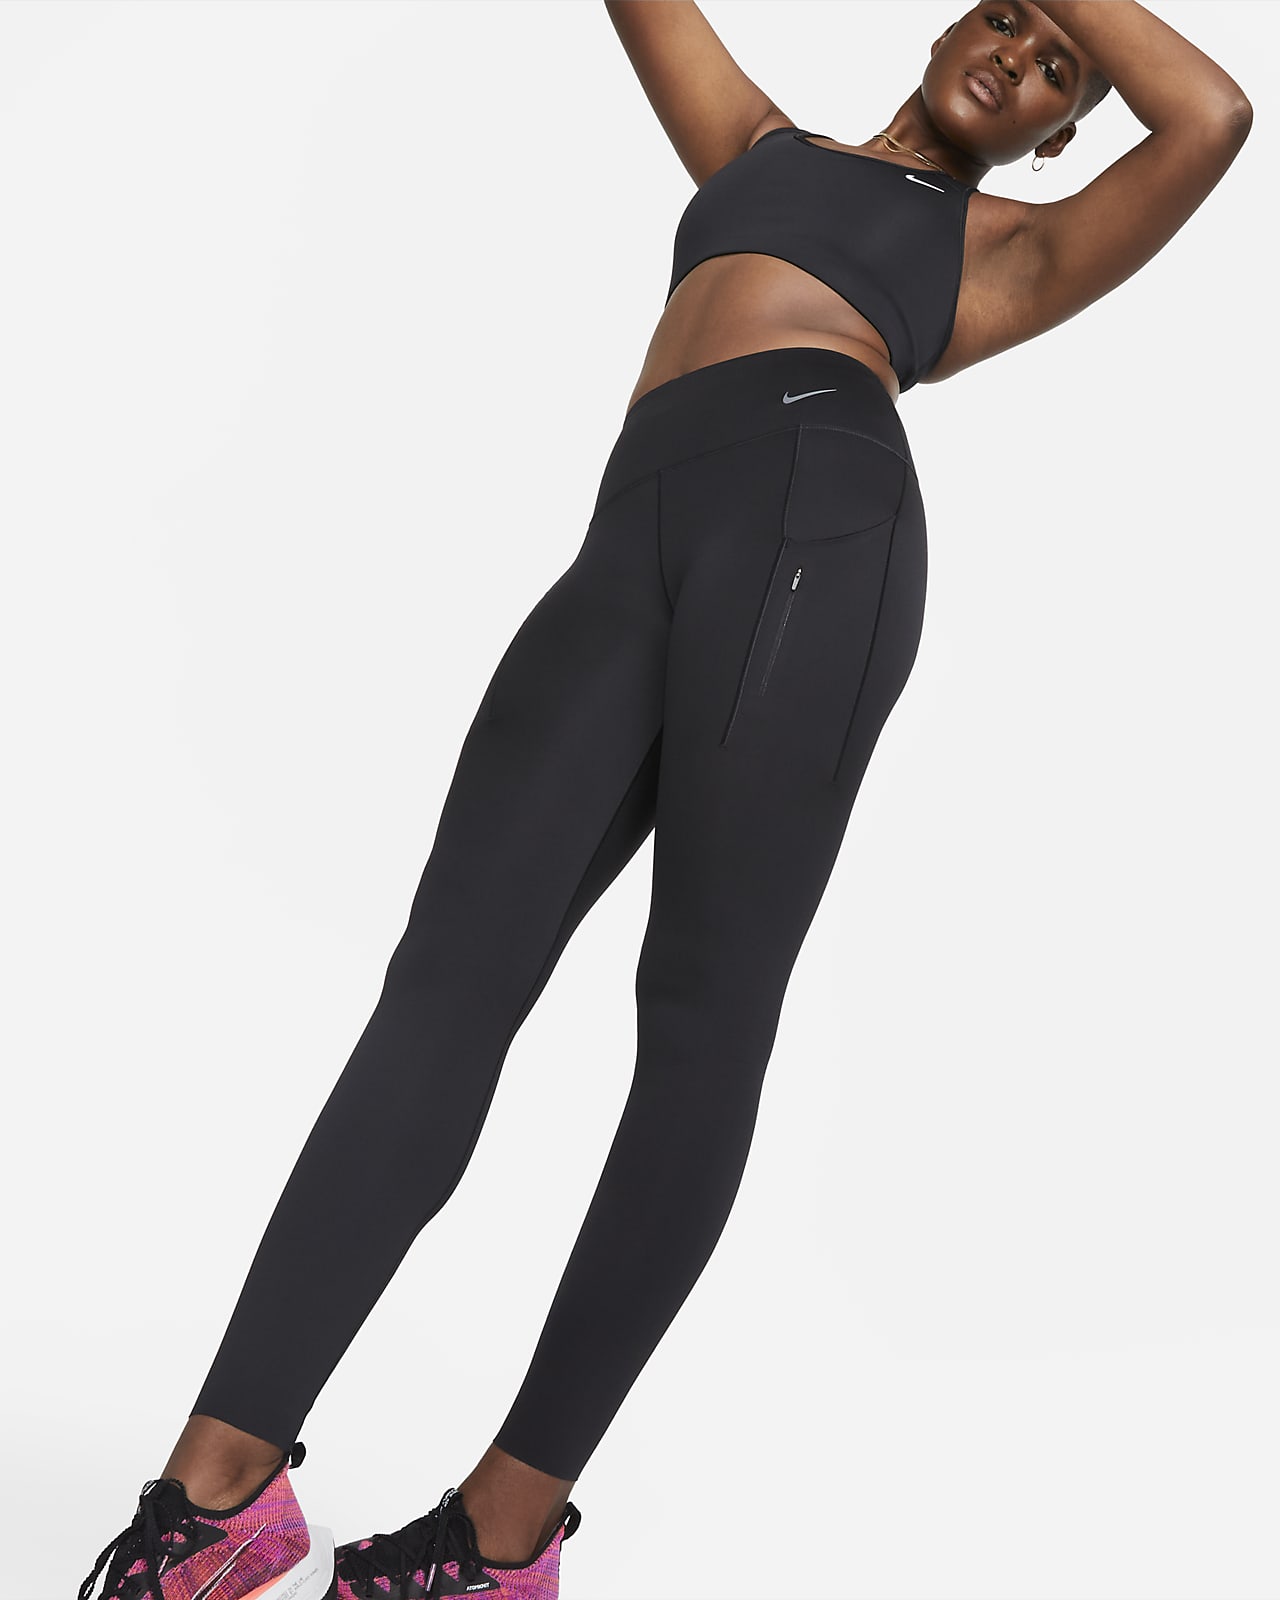 Espectador Desmañado aritmética Nike Go Women's Firm-Support Mid-Rise Full-Length Leggings with Pockets.  Nike.com